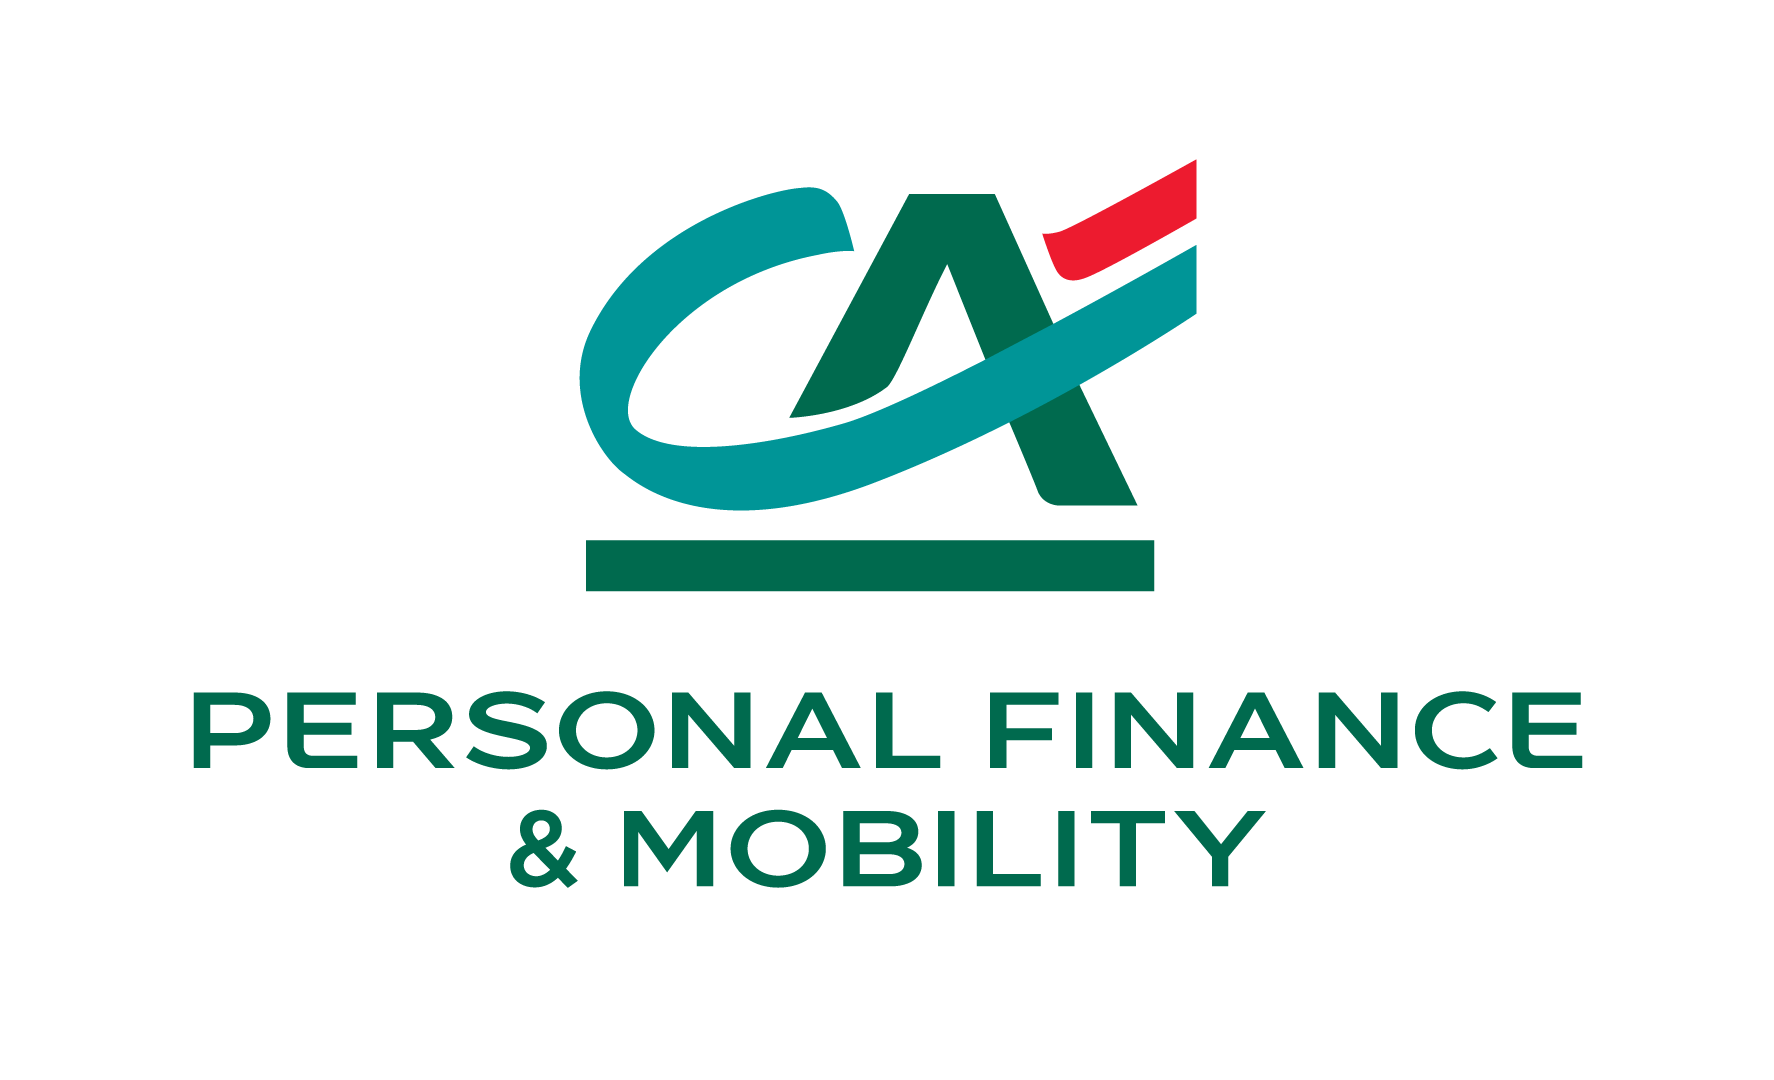 Crédit Agricole Personal Finance & Mobility